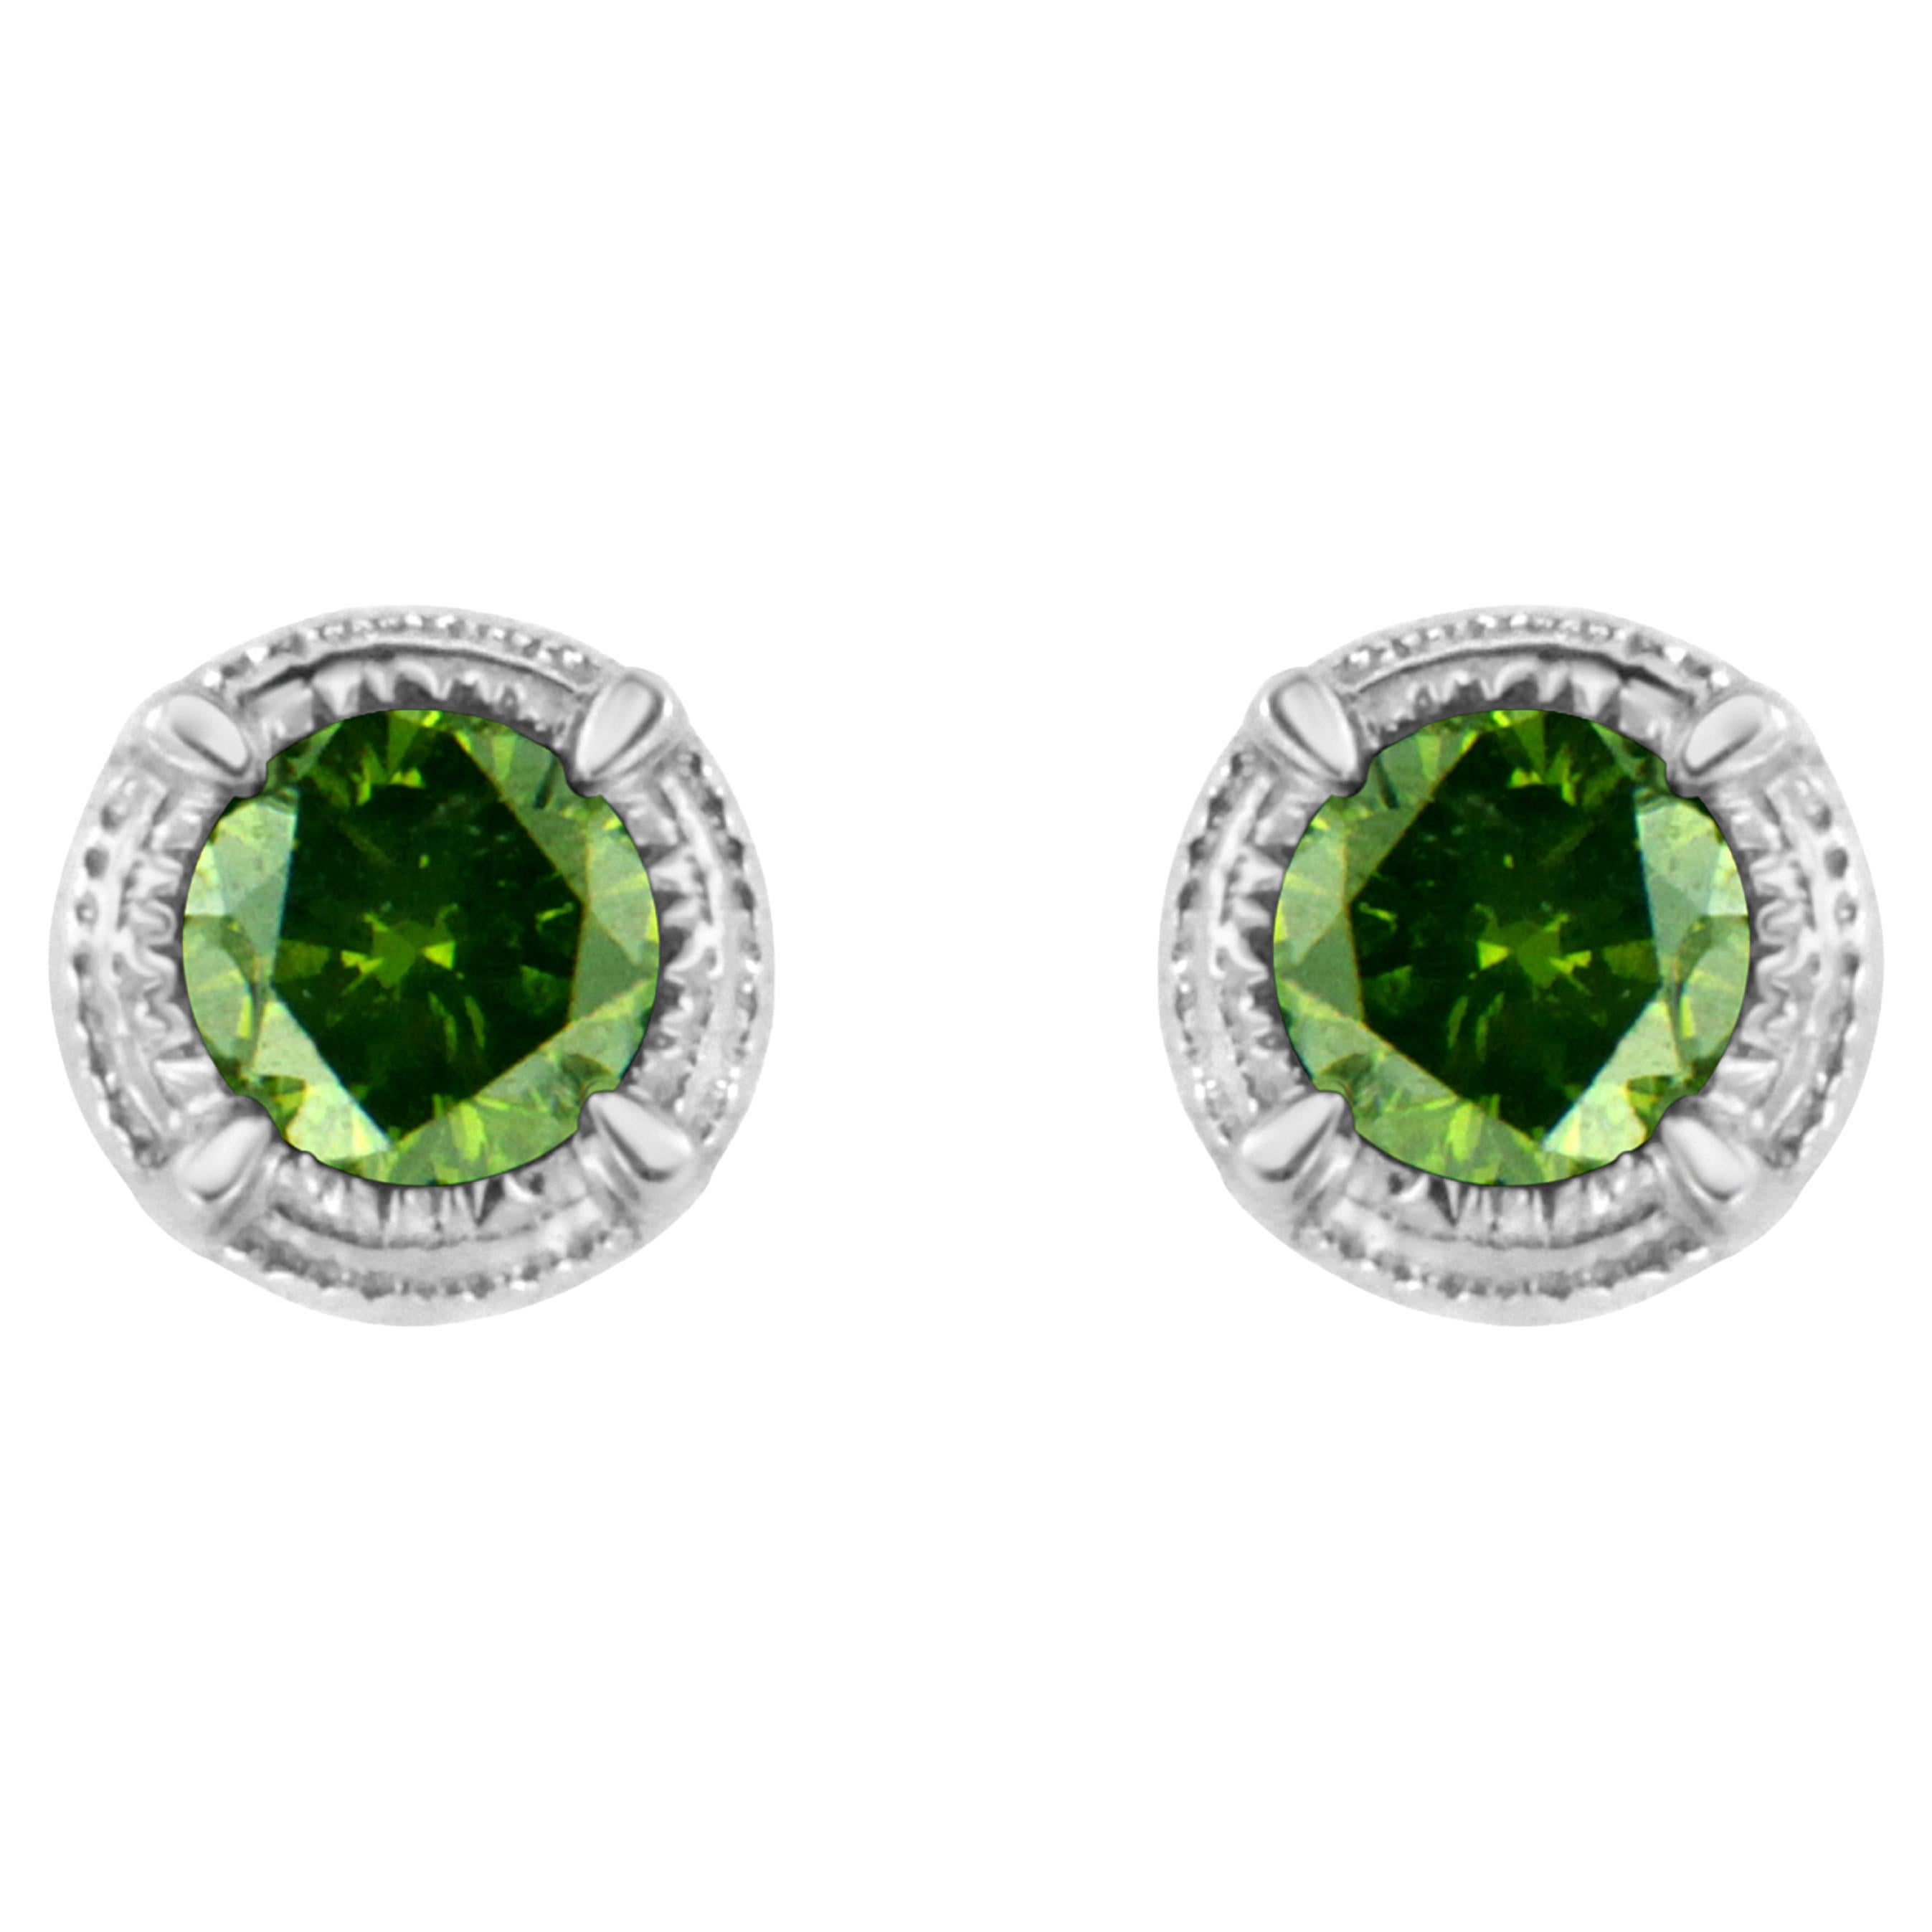 .925 Sterling Silver 1/4 Carat Treated Green Diamond Milgrain Stud Earrings